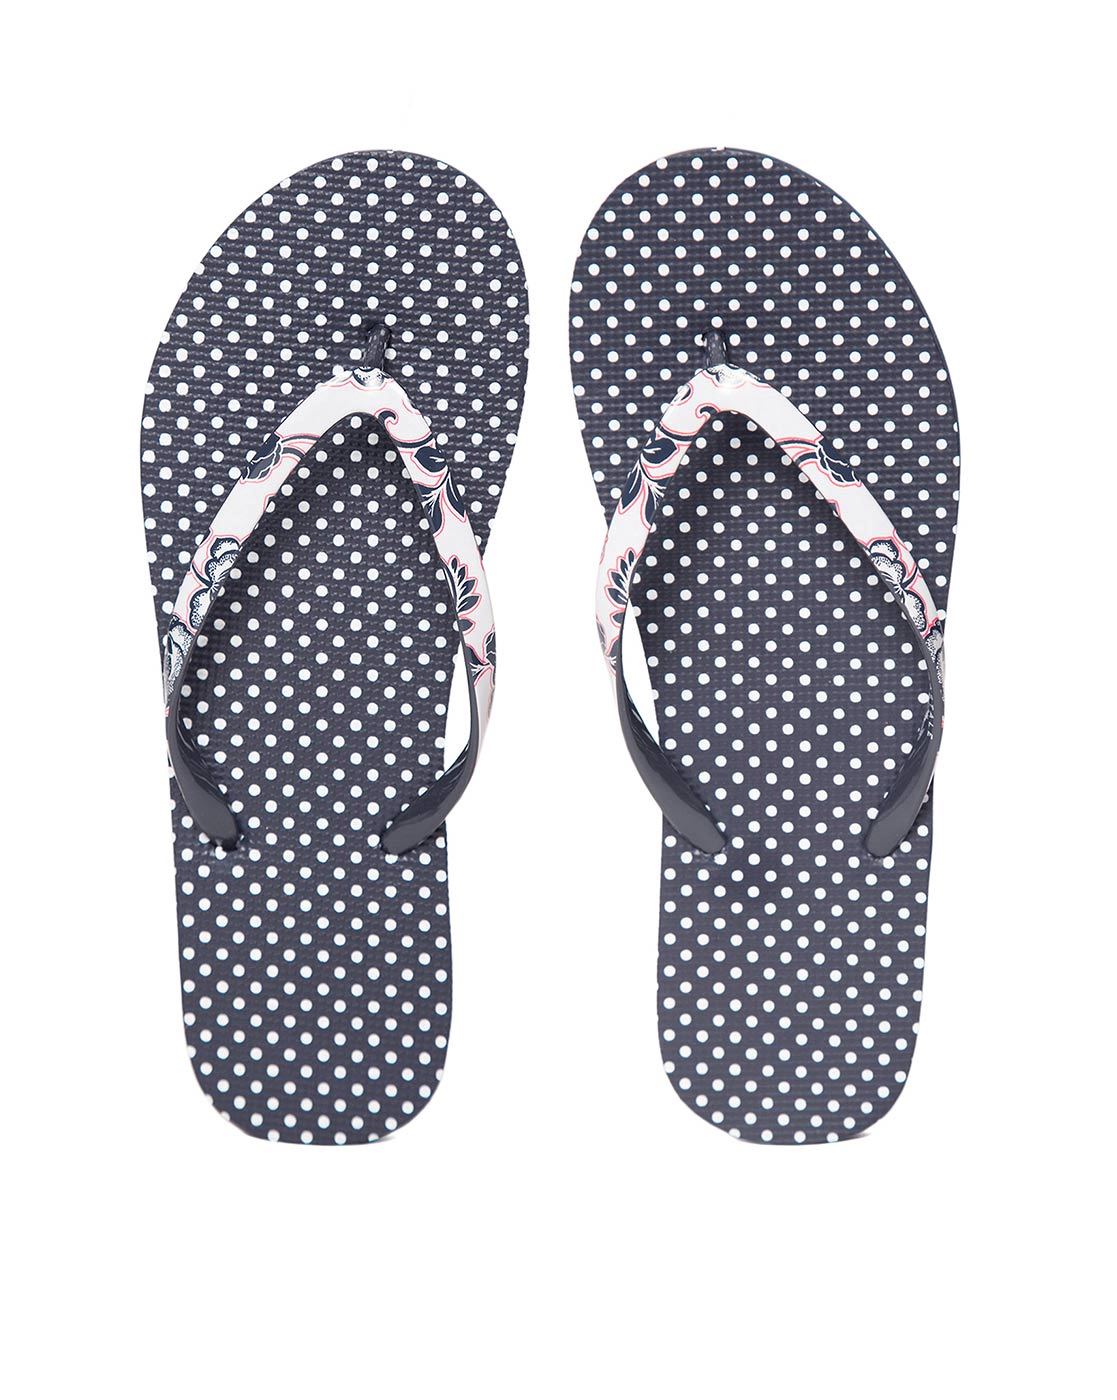 aeropostale flip flop slippers